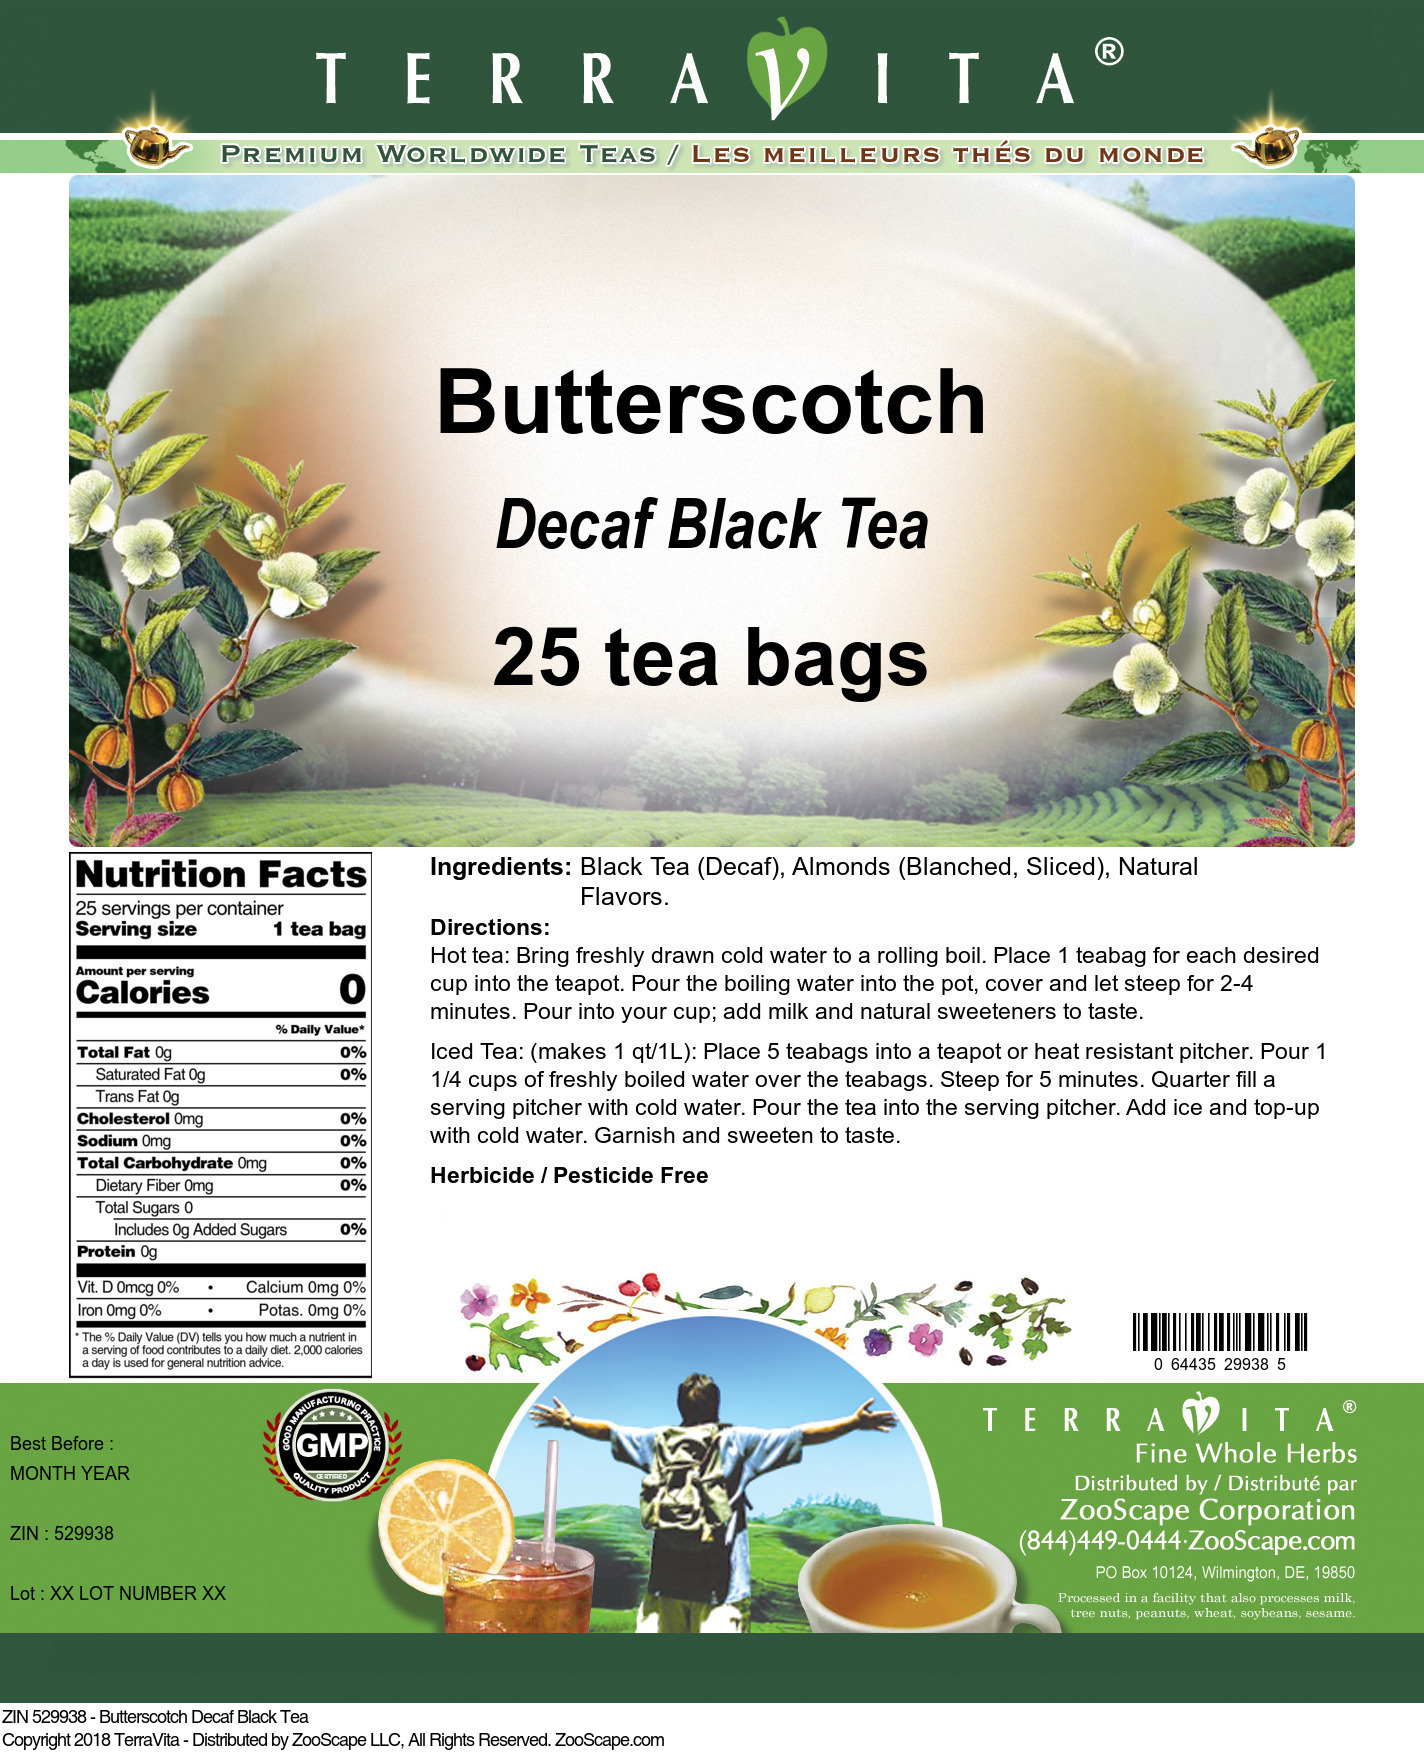 Butterscotch Decaf Black Tea - Label